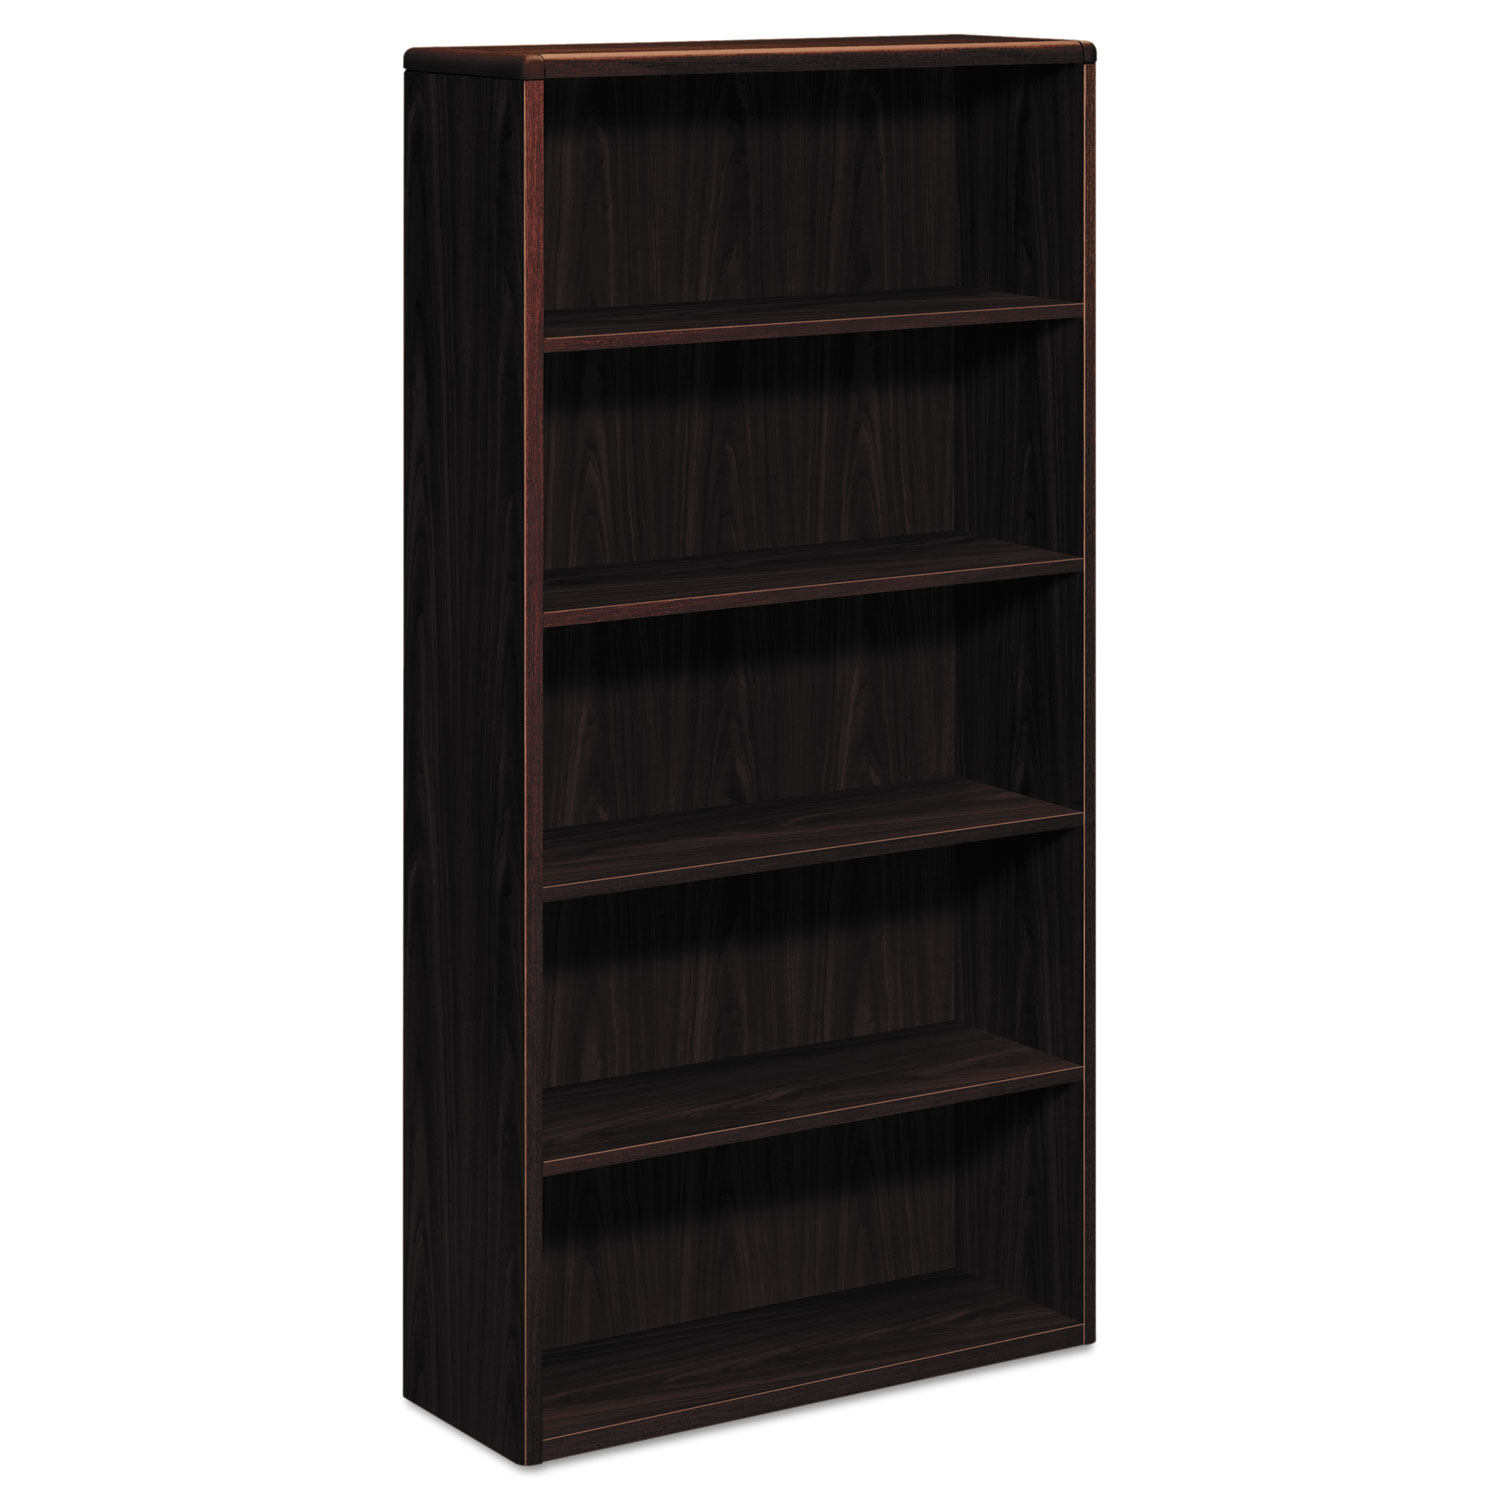  HON H10755.NN 10700 Series Wood Bookcase, Five Shelf, 36w x 13 1/8d x 71h, Mahogany (HON10755NN) 